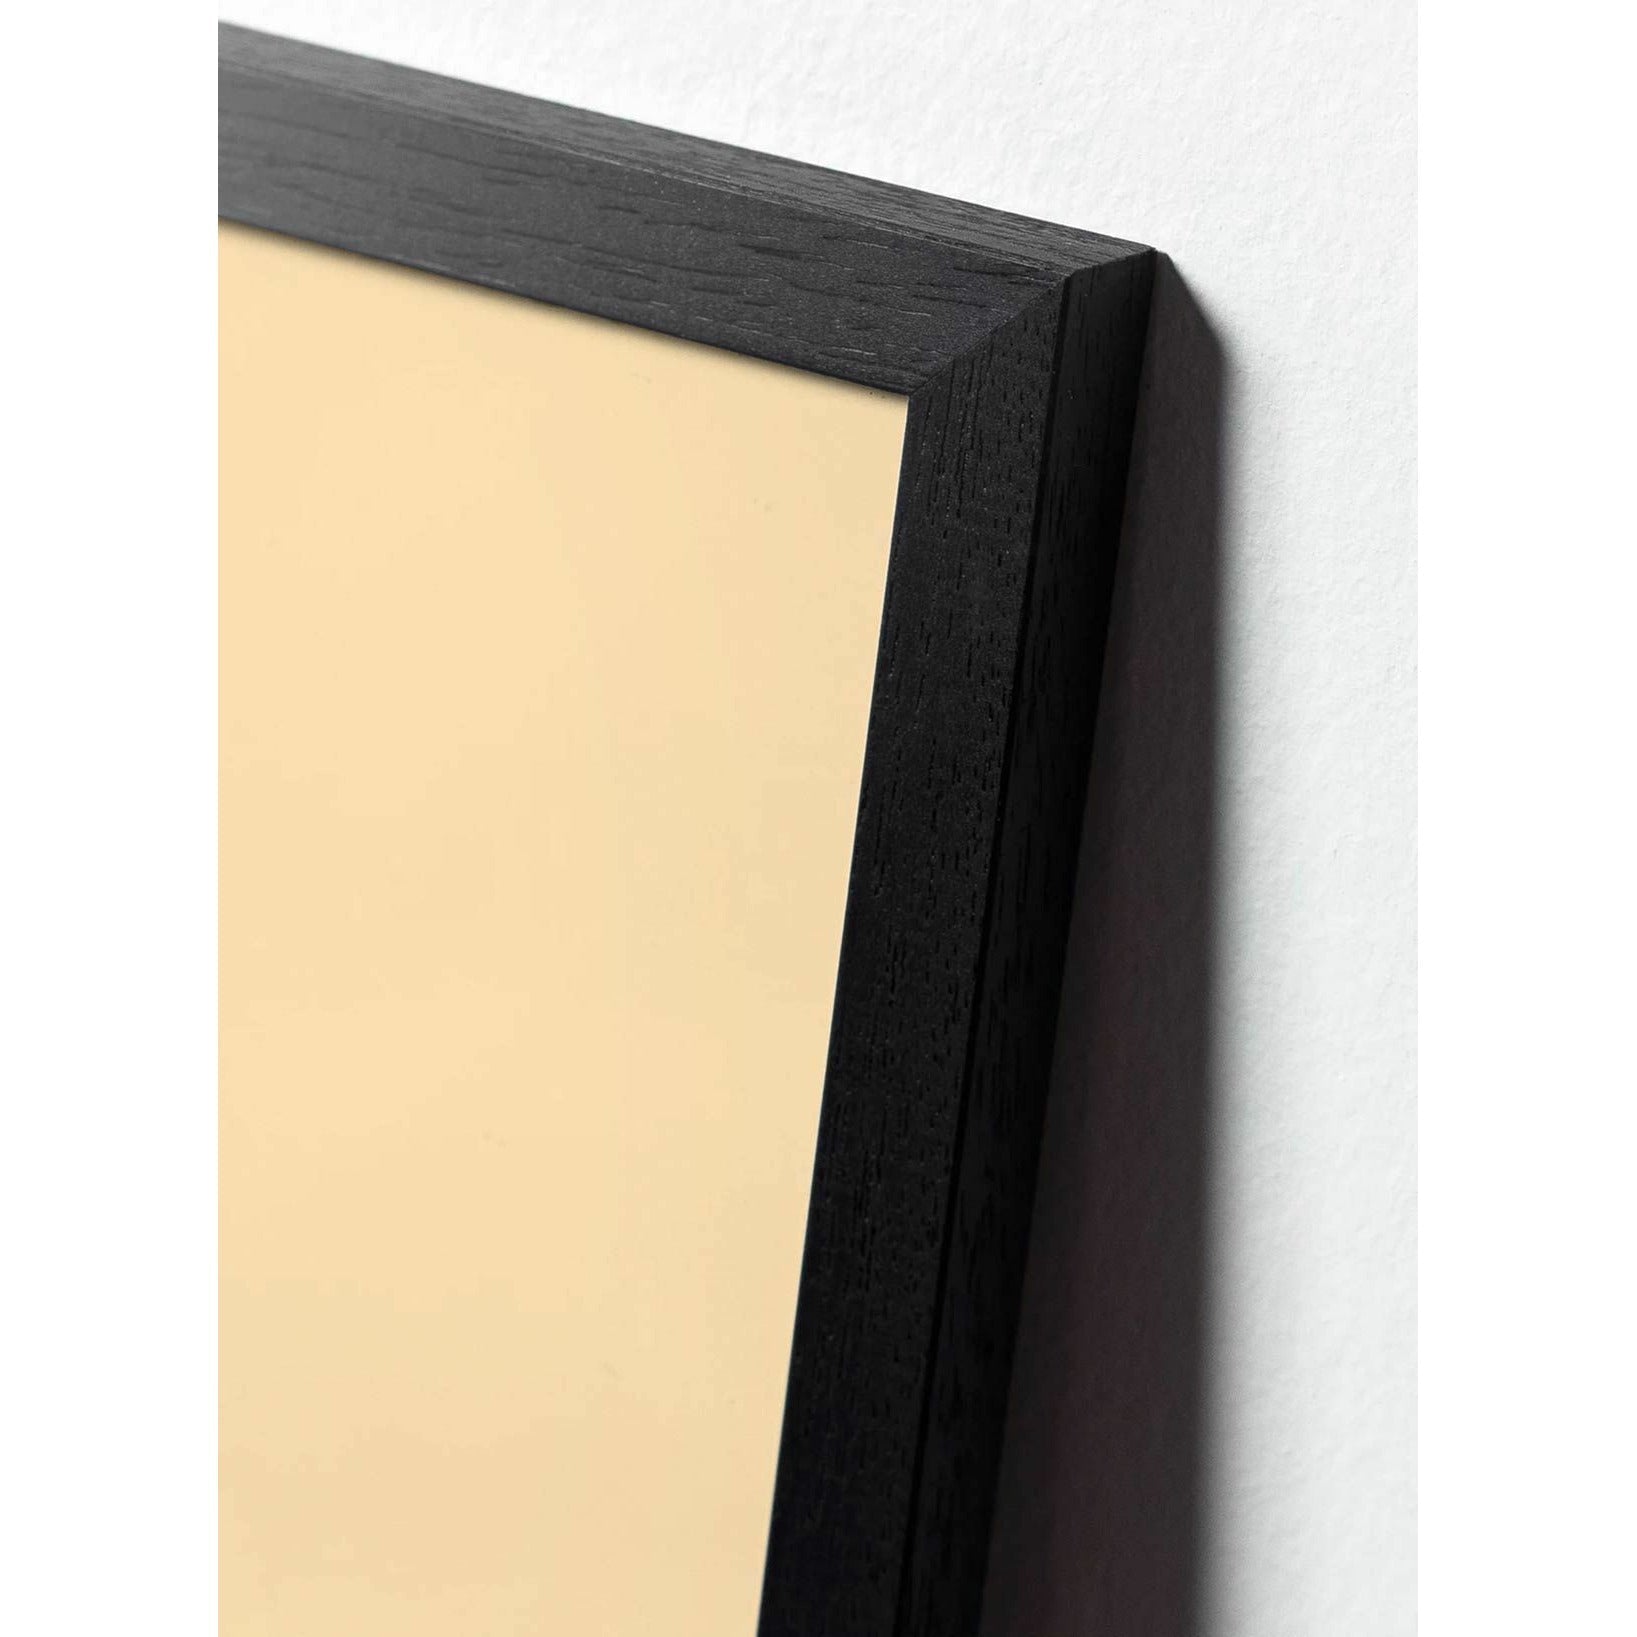 Póster clásico de cono de pino de creación, marco hecho de madera lacada negra de 30x40 cm, fondo de color arena